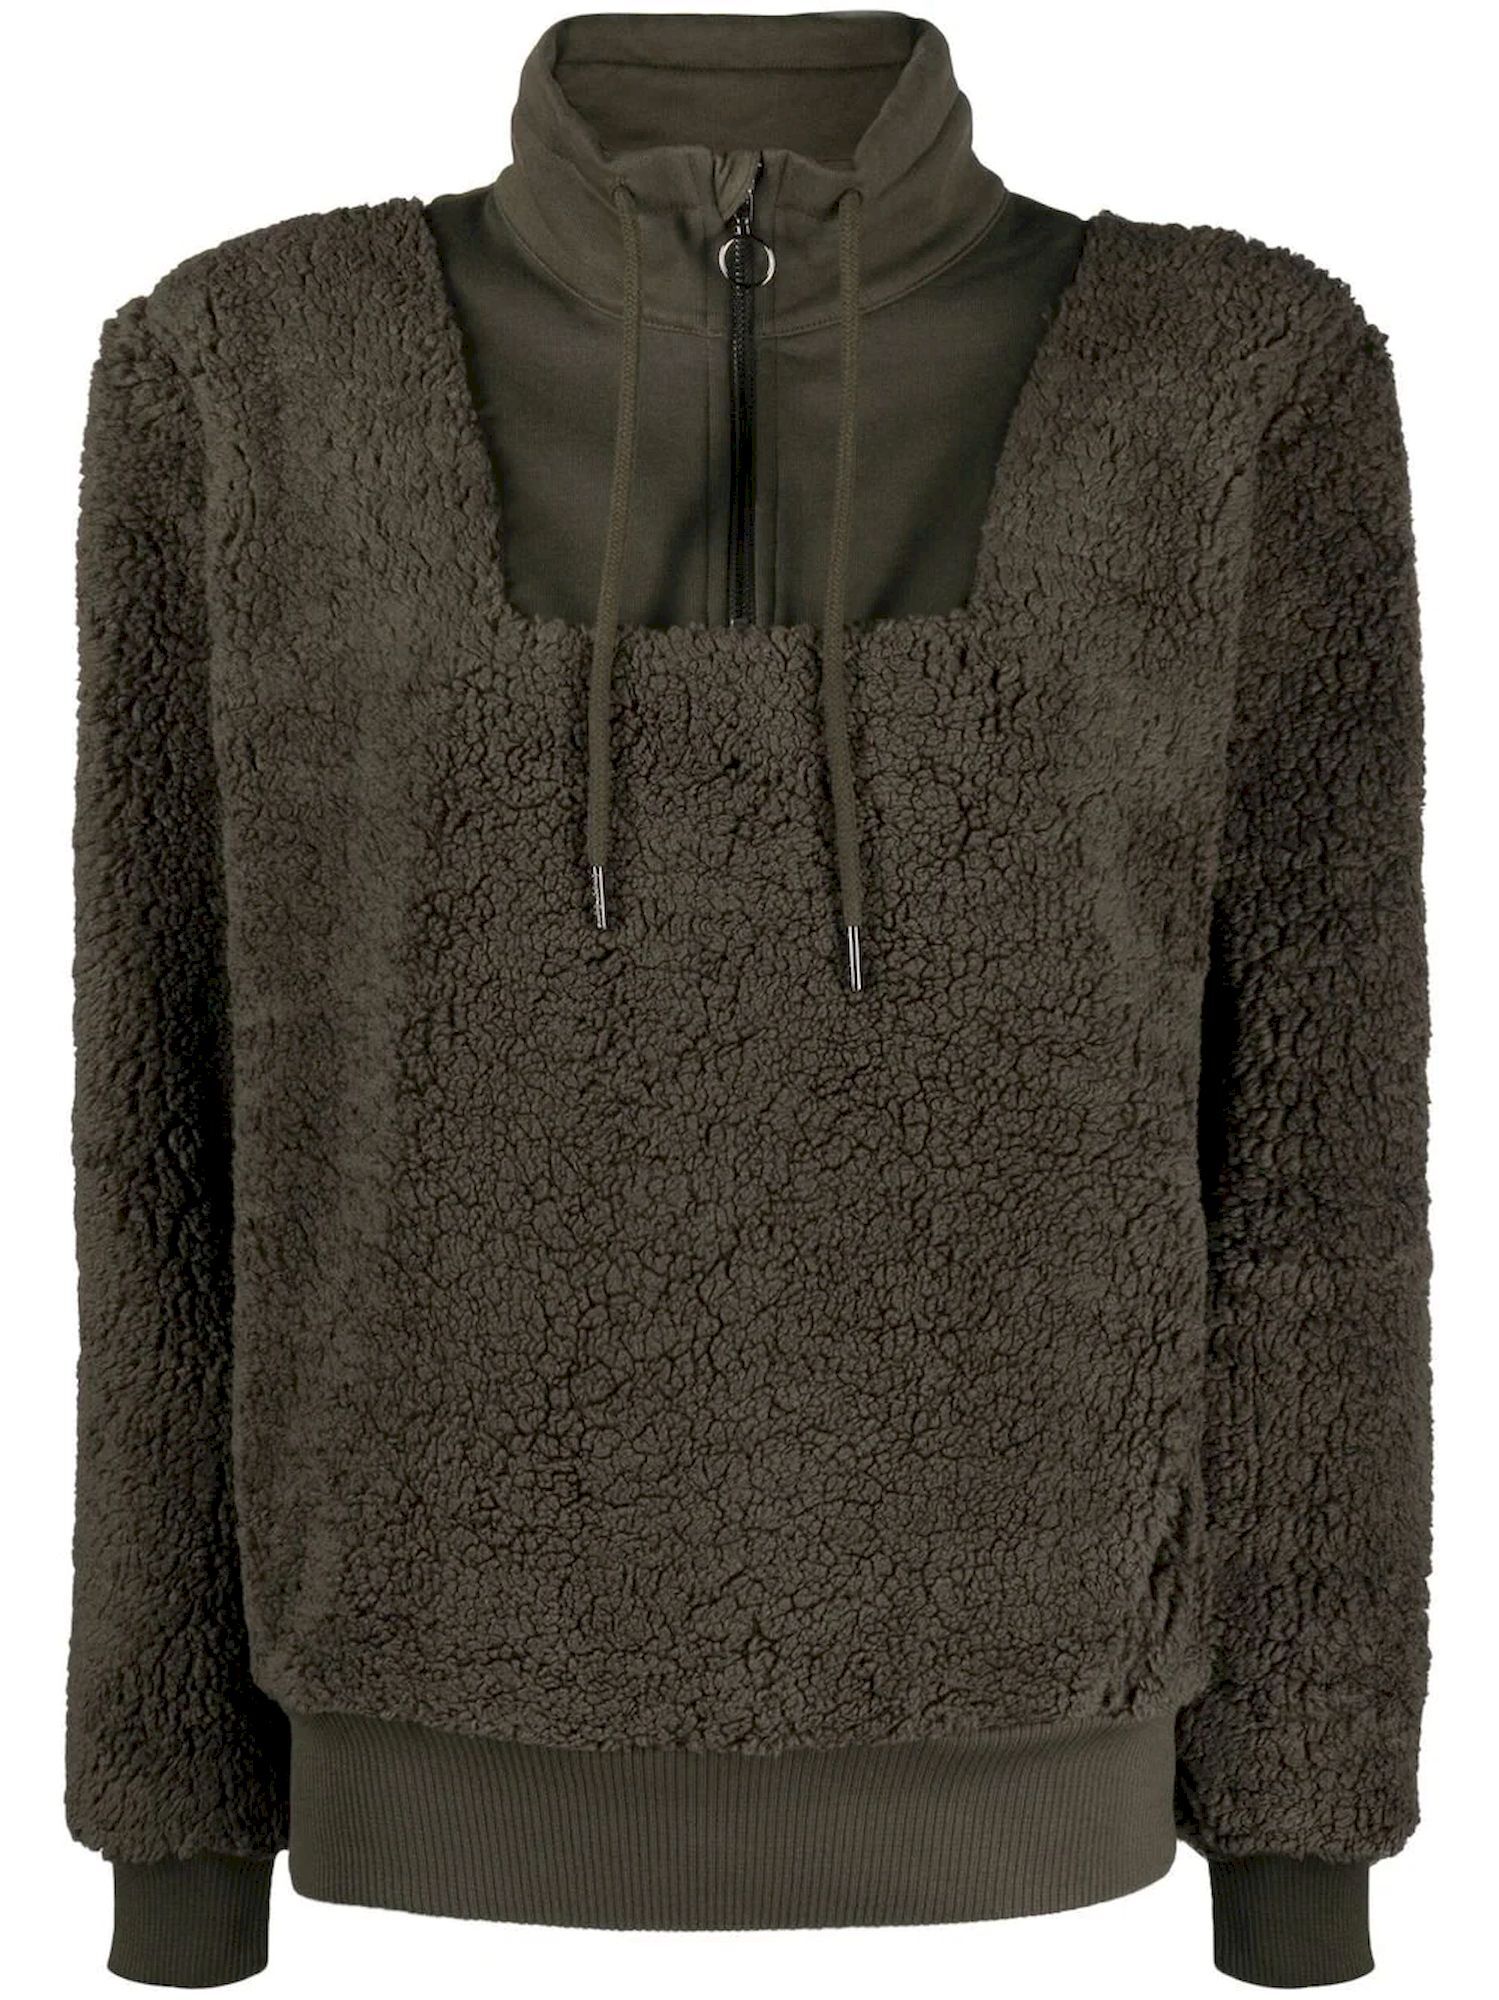 Sweaty Betty Sherpa Half Zip Sweatshirt - Pullover - Damen